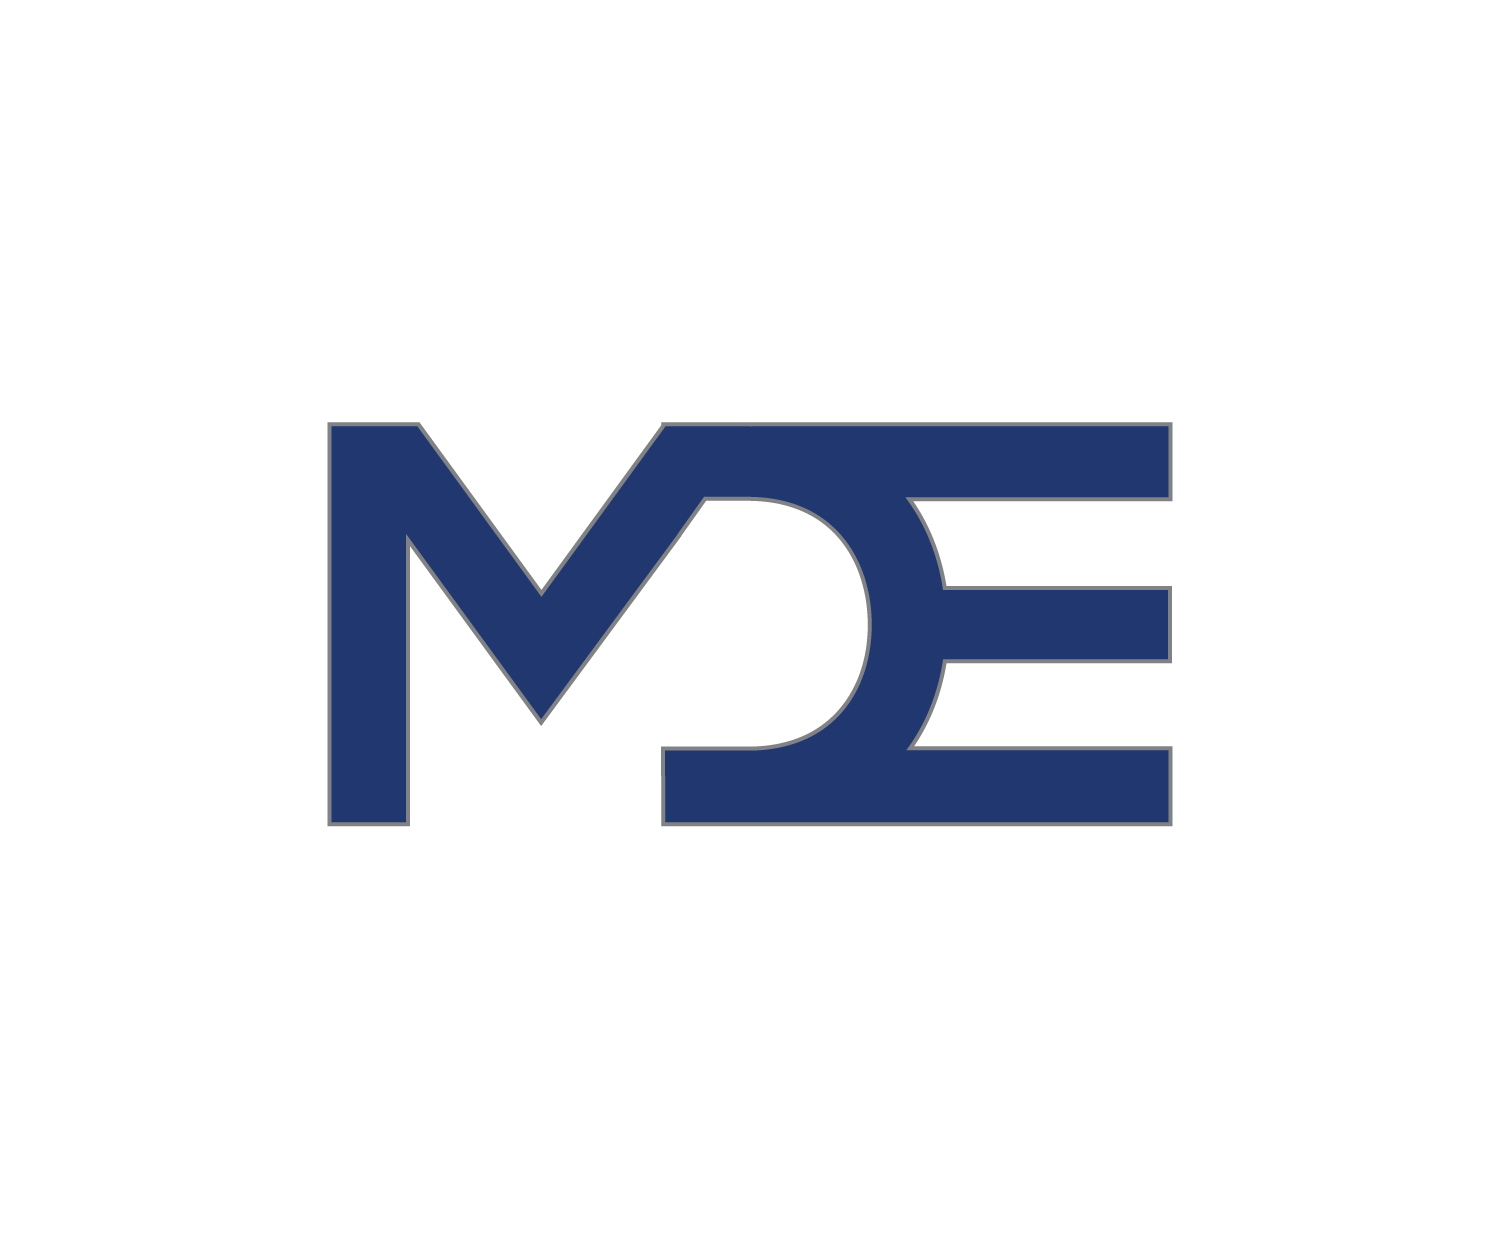 Mde Logo - Modern, Professional, Civil Engineer Logo Design for M-D-E (acronym ...